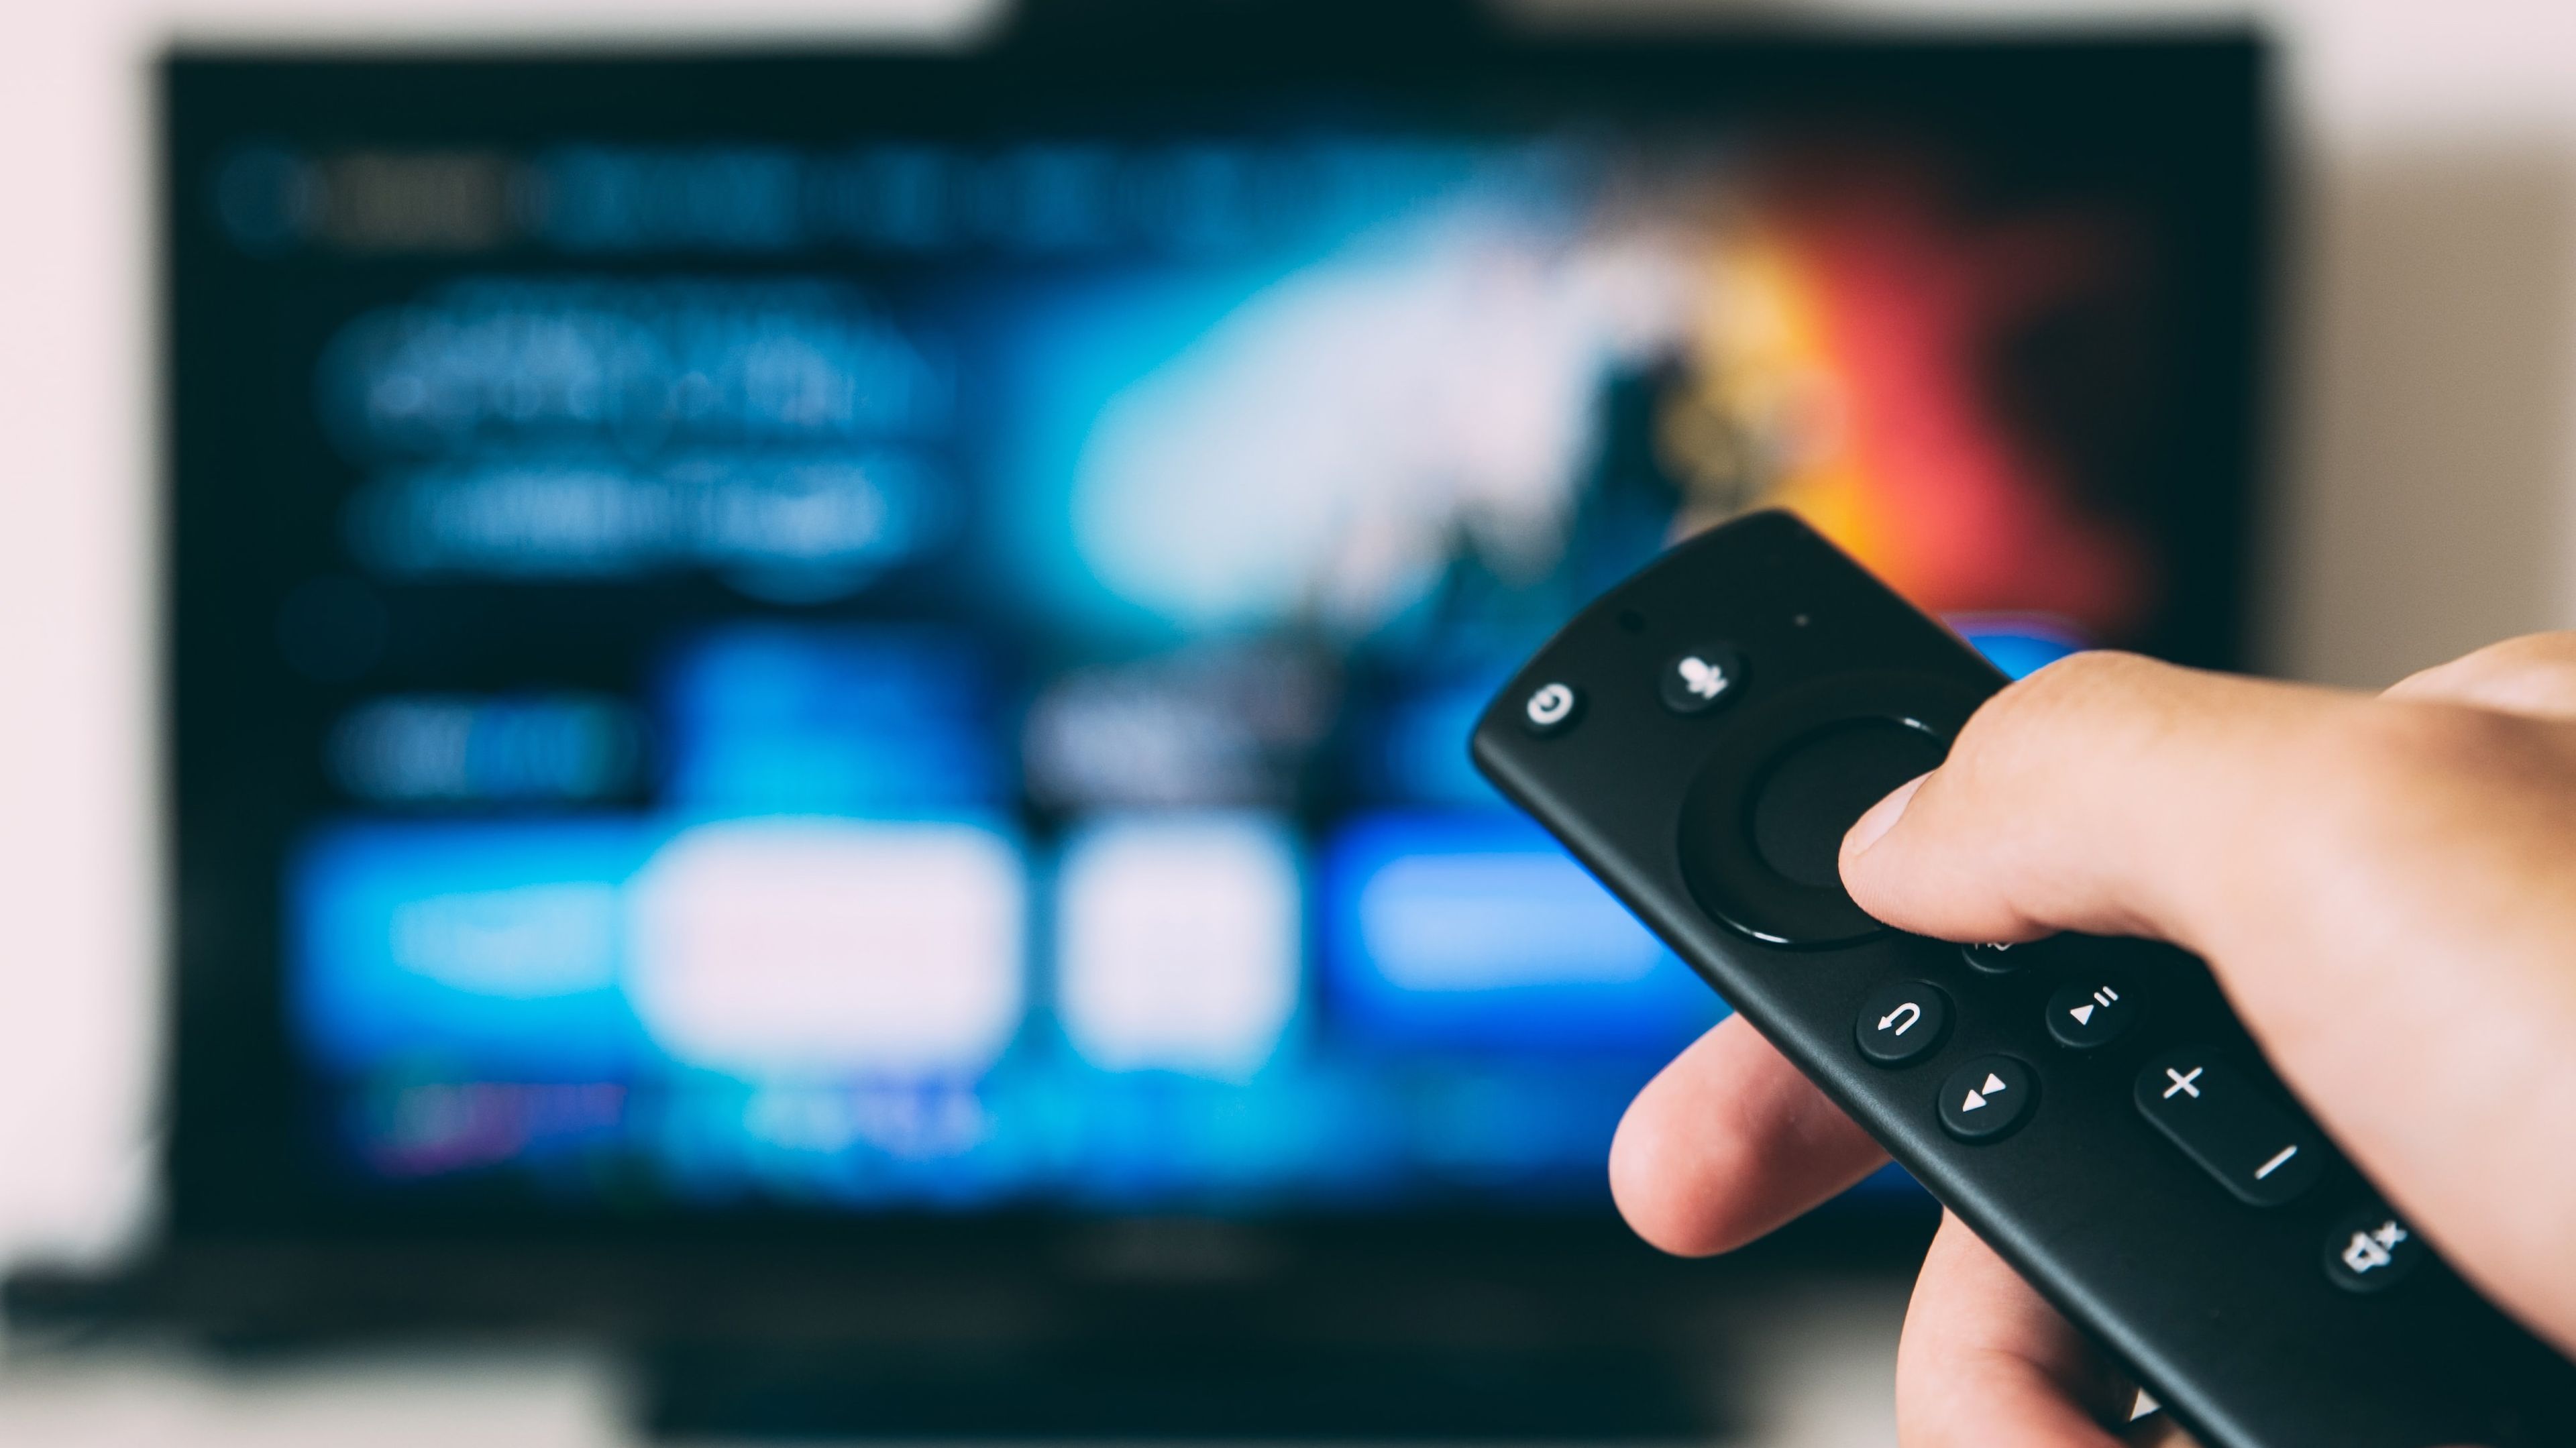 Tu tele con Android TV, Google TV o un Fire TV puede servir para navegar por